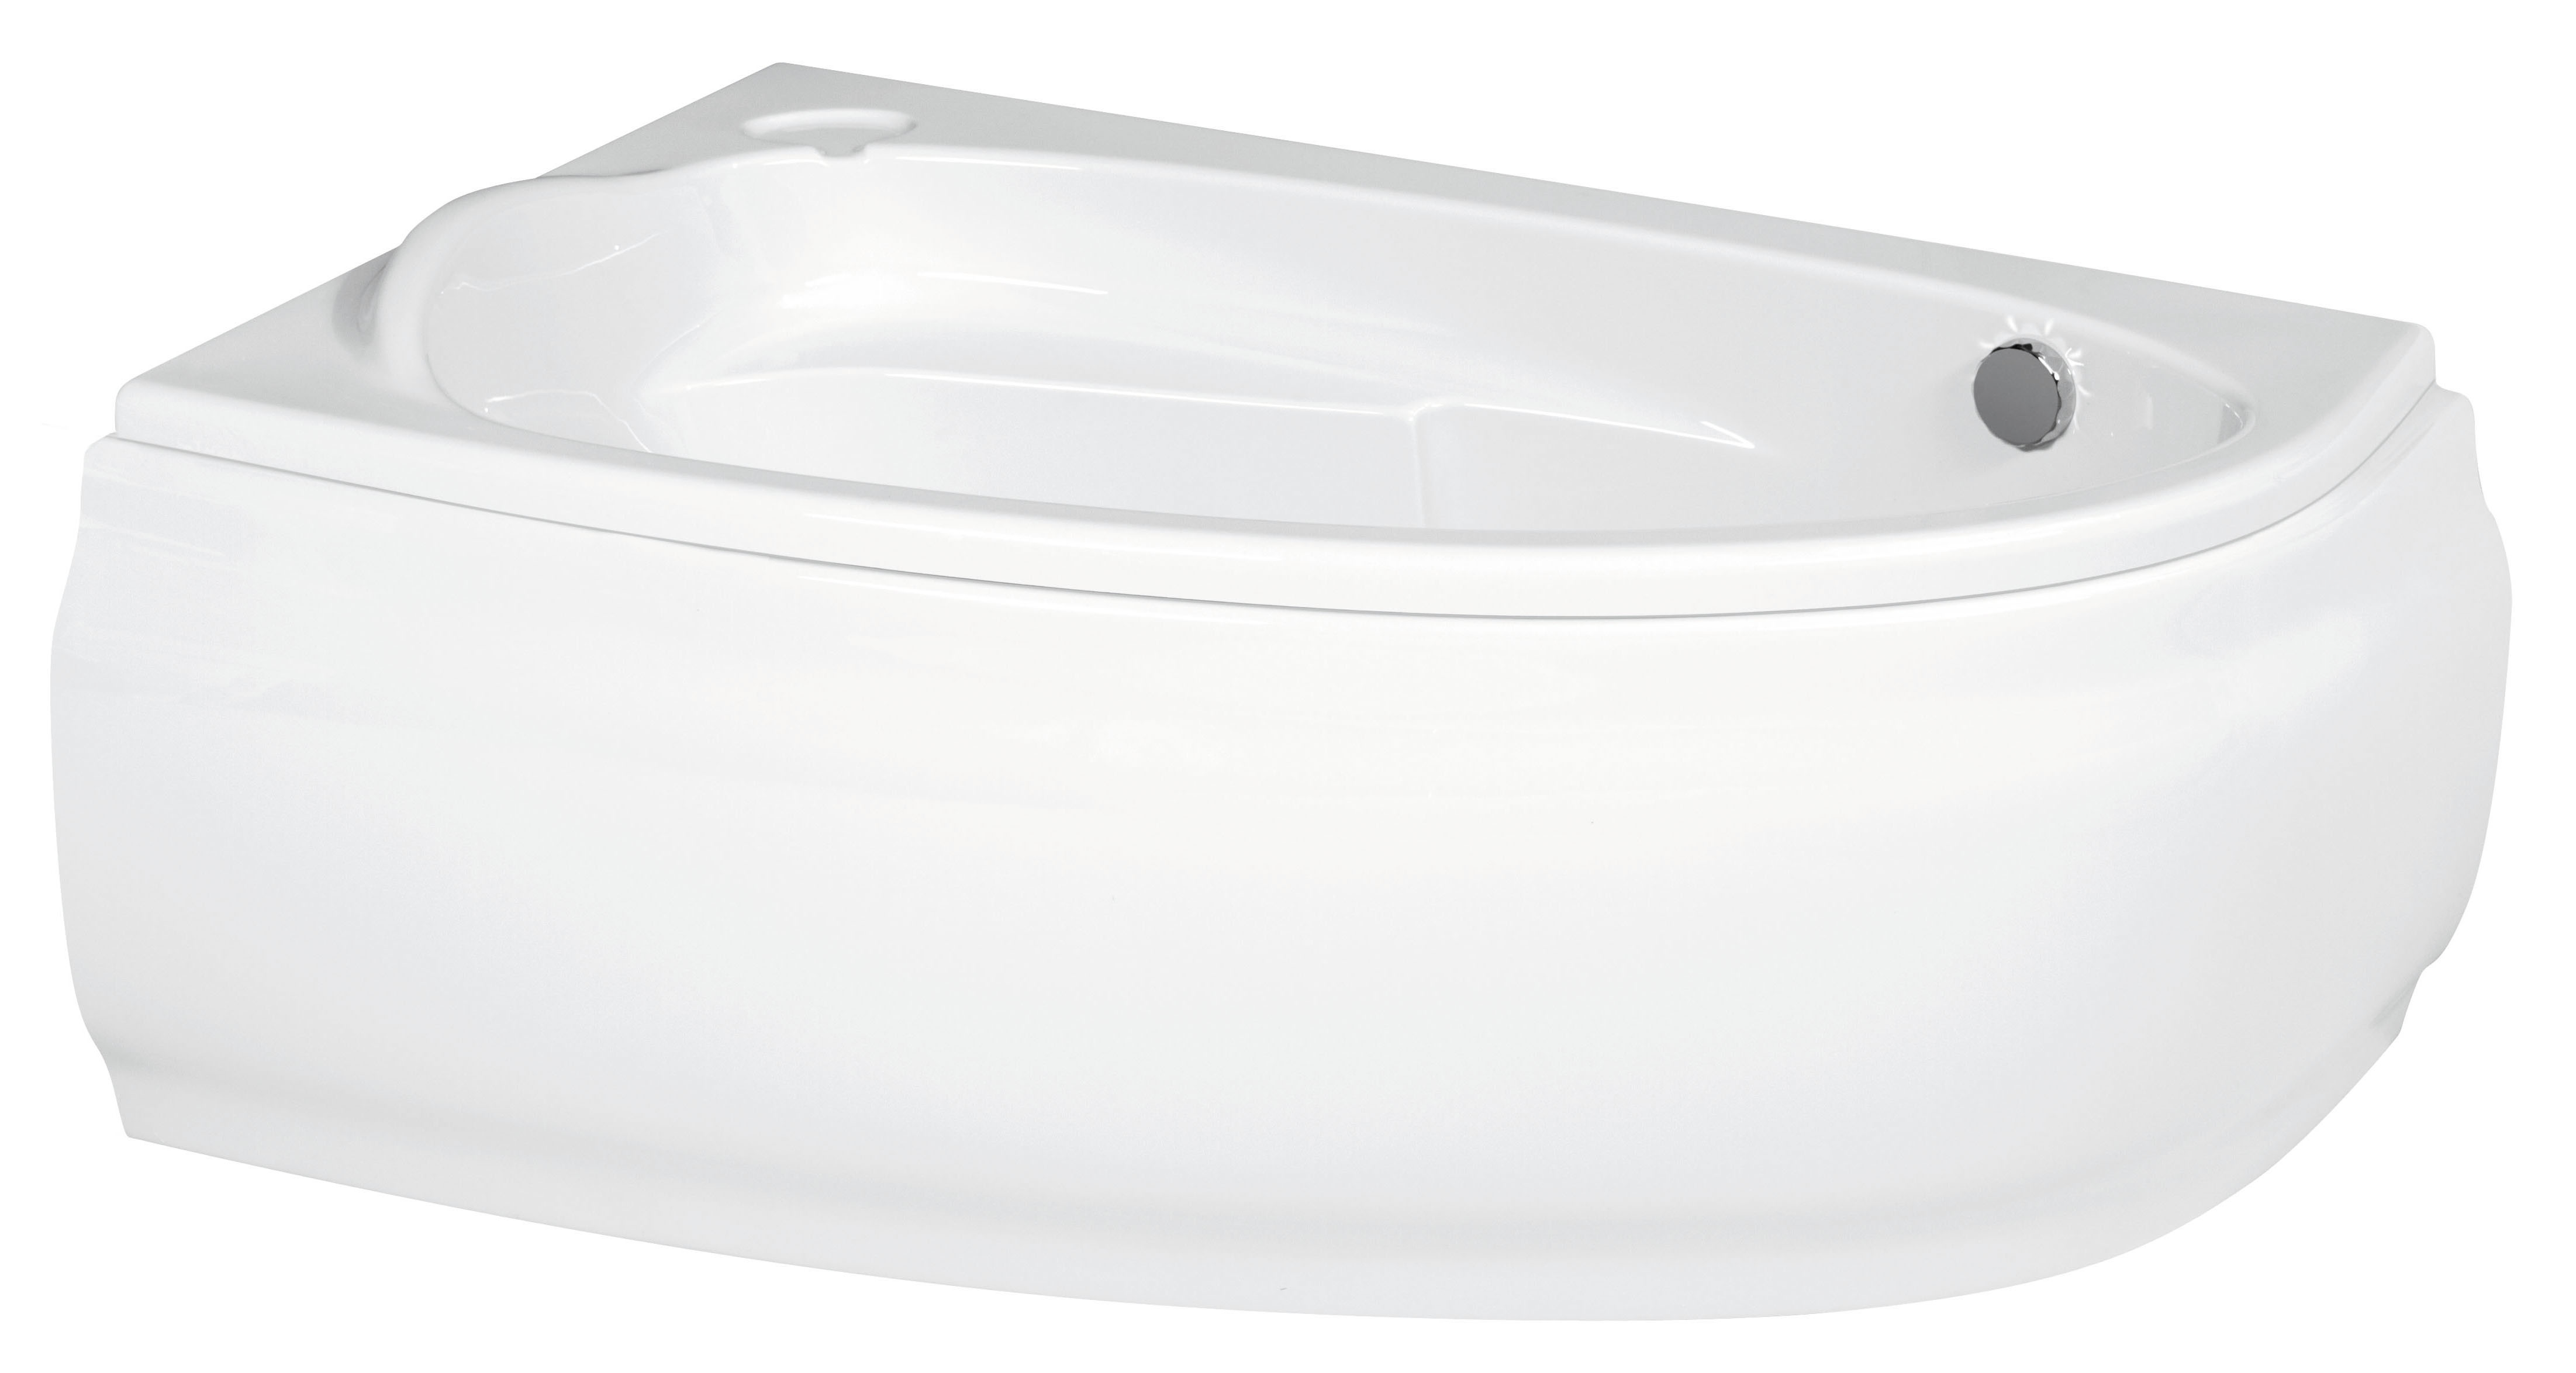 Акриловая ванна Cersanit Joanna 160x95 L ультра белая, размер 160x95, цвет белый 63338 - фото 2